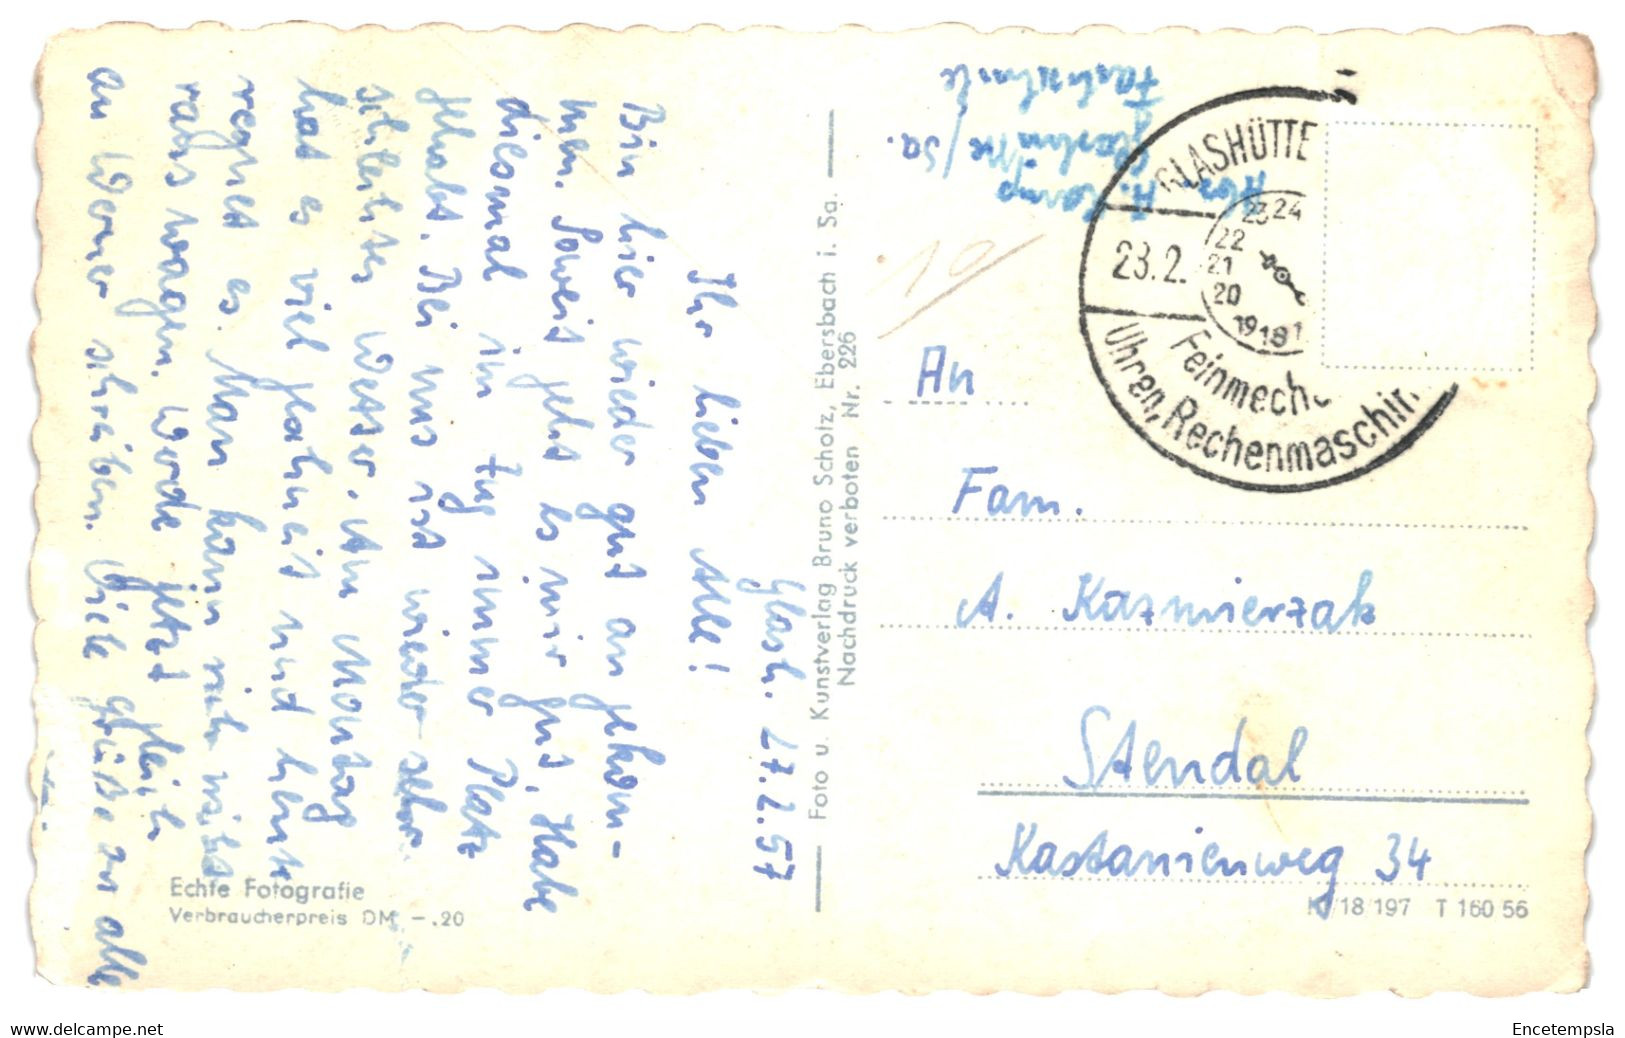 CPSM - Carte Postale - Germany-Glashütte 1957  VM37415 - Glashütte